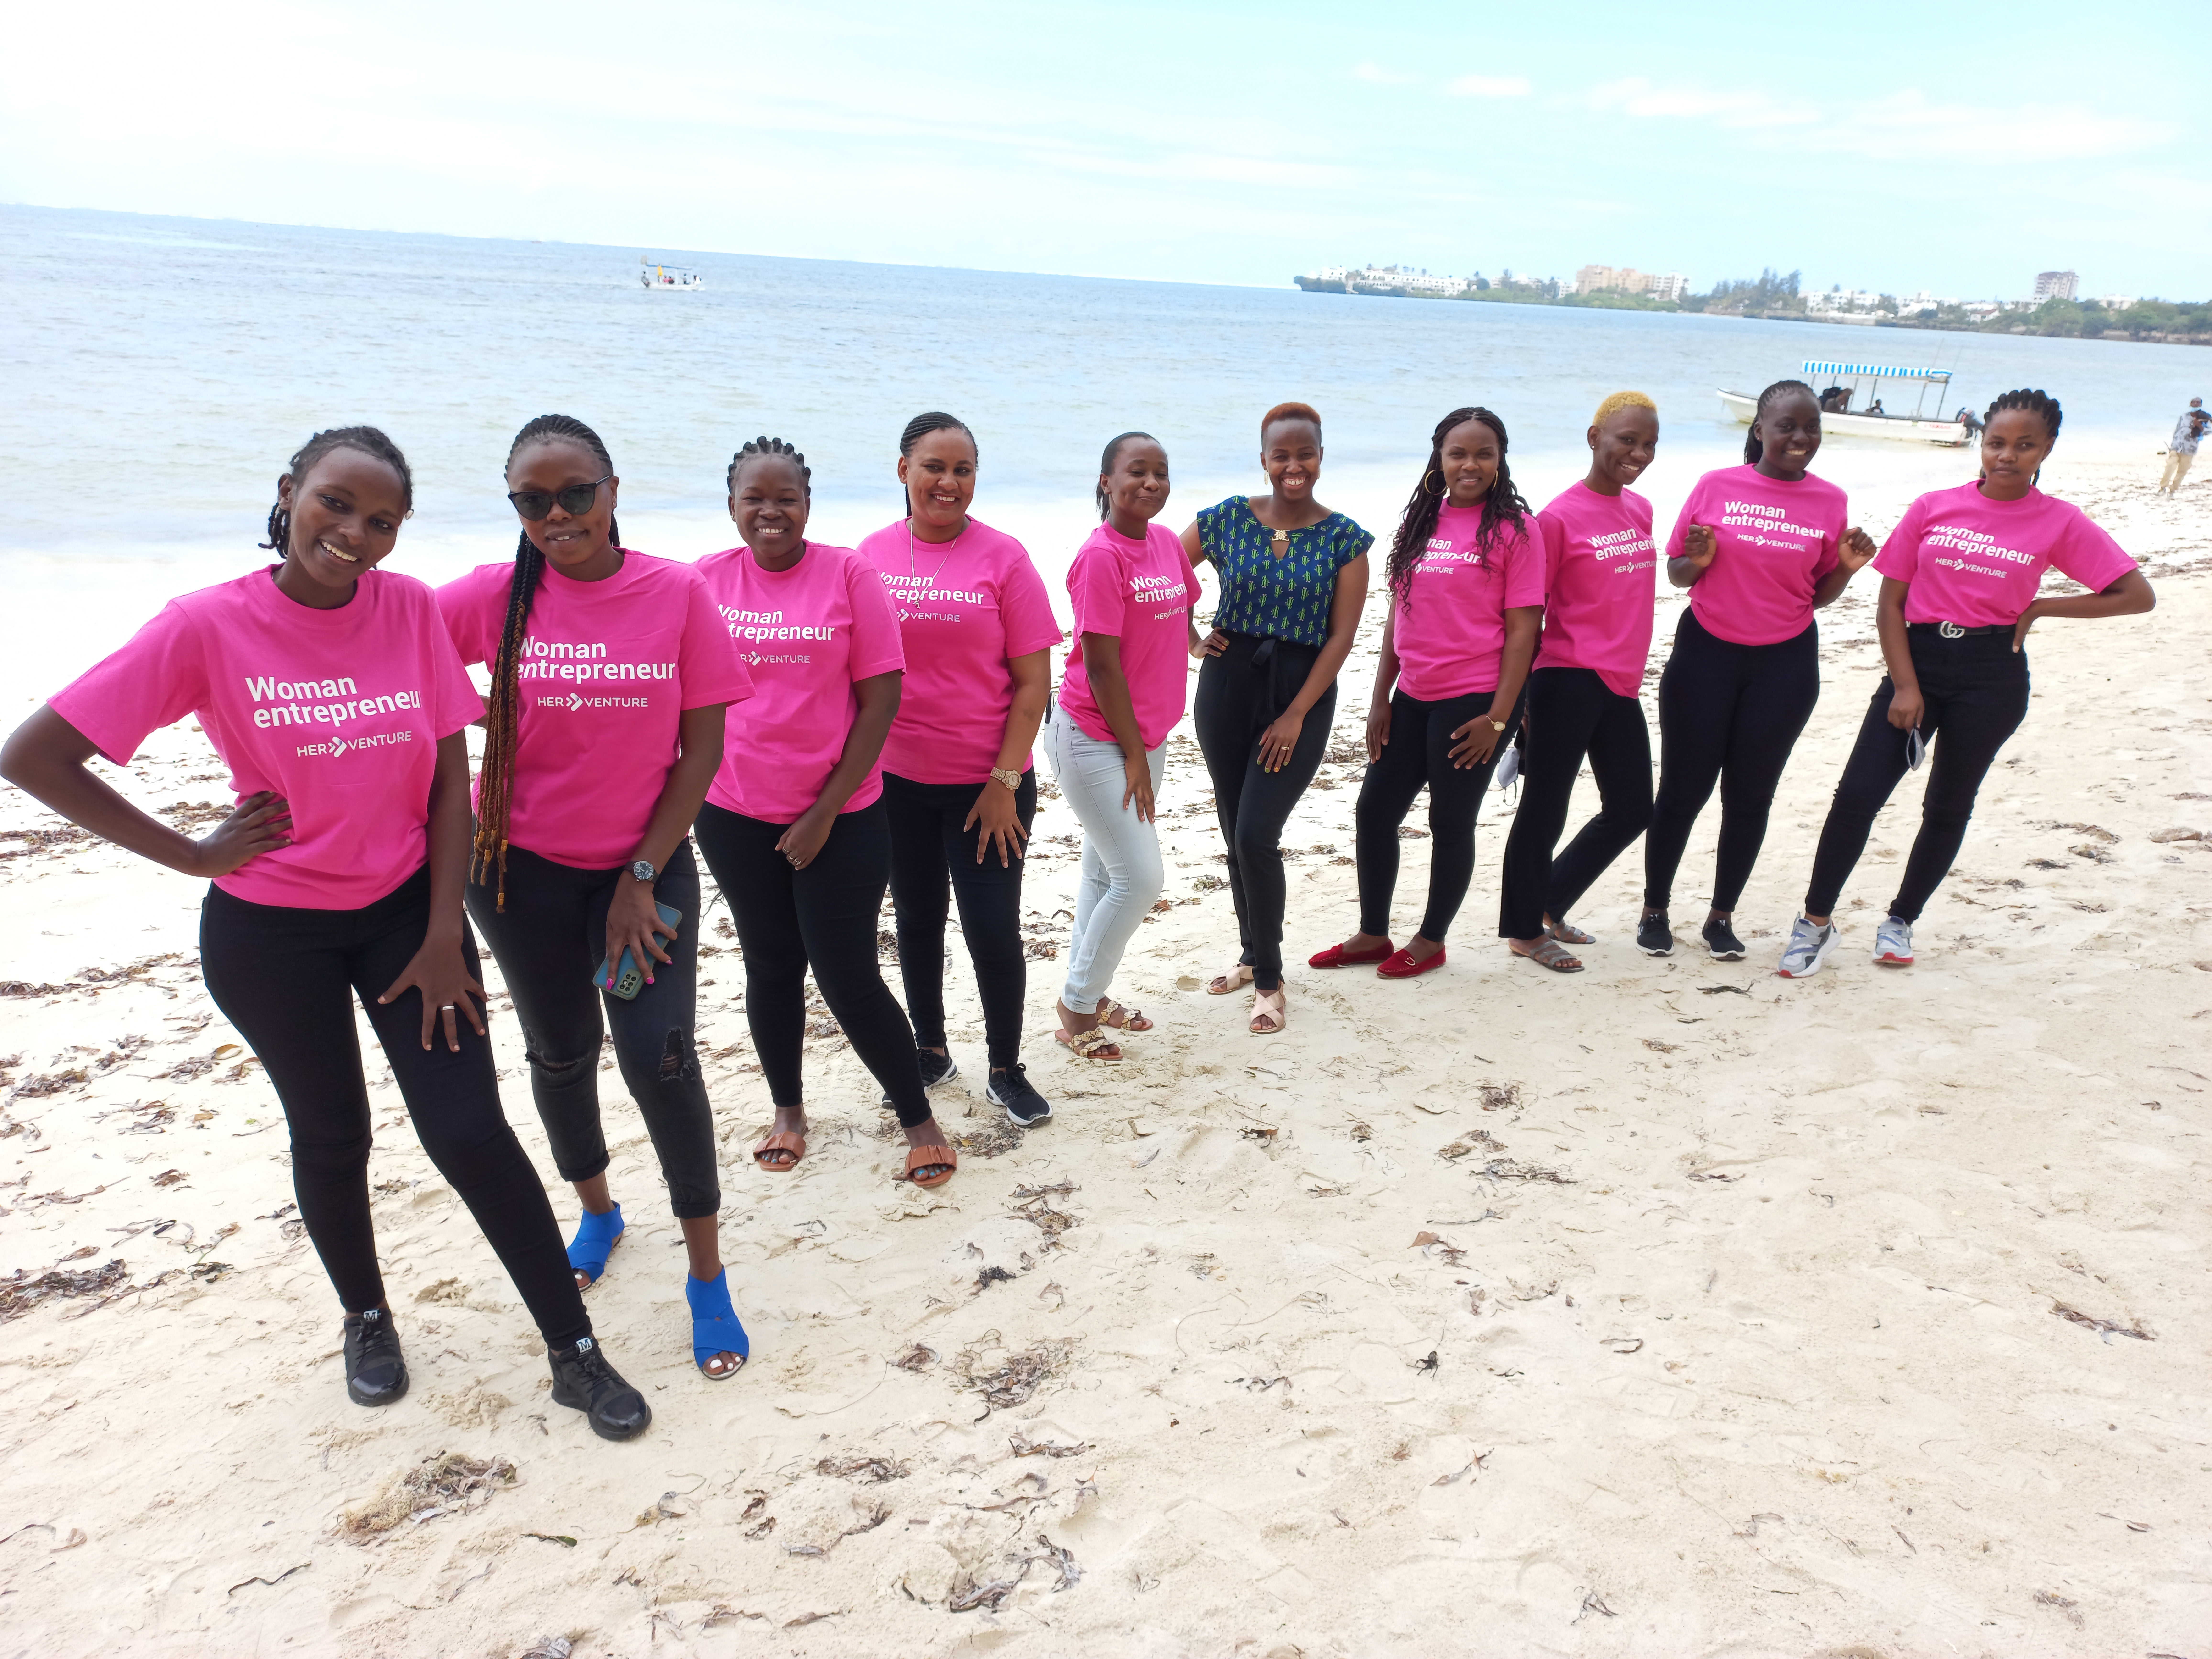 HerVenture Kenya ambassadors pose on the beach